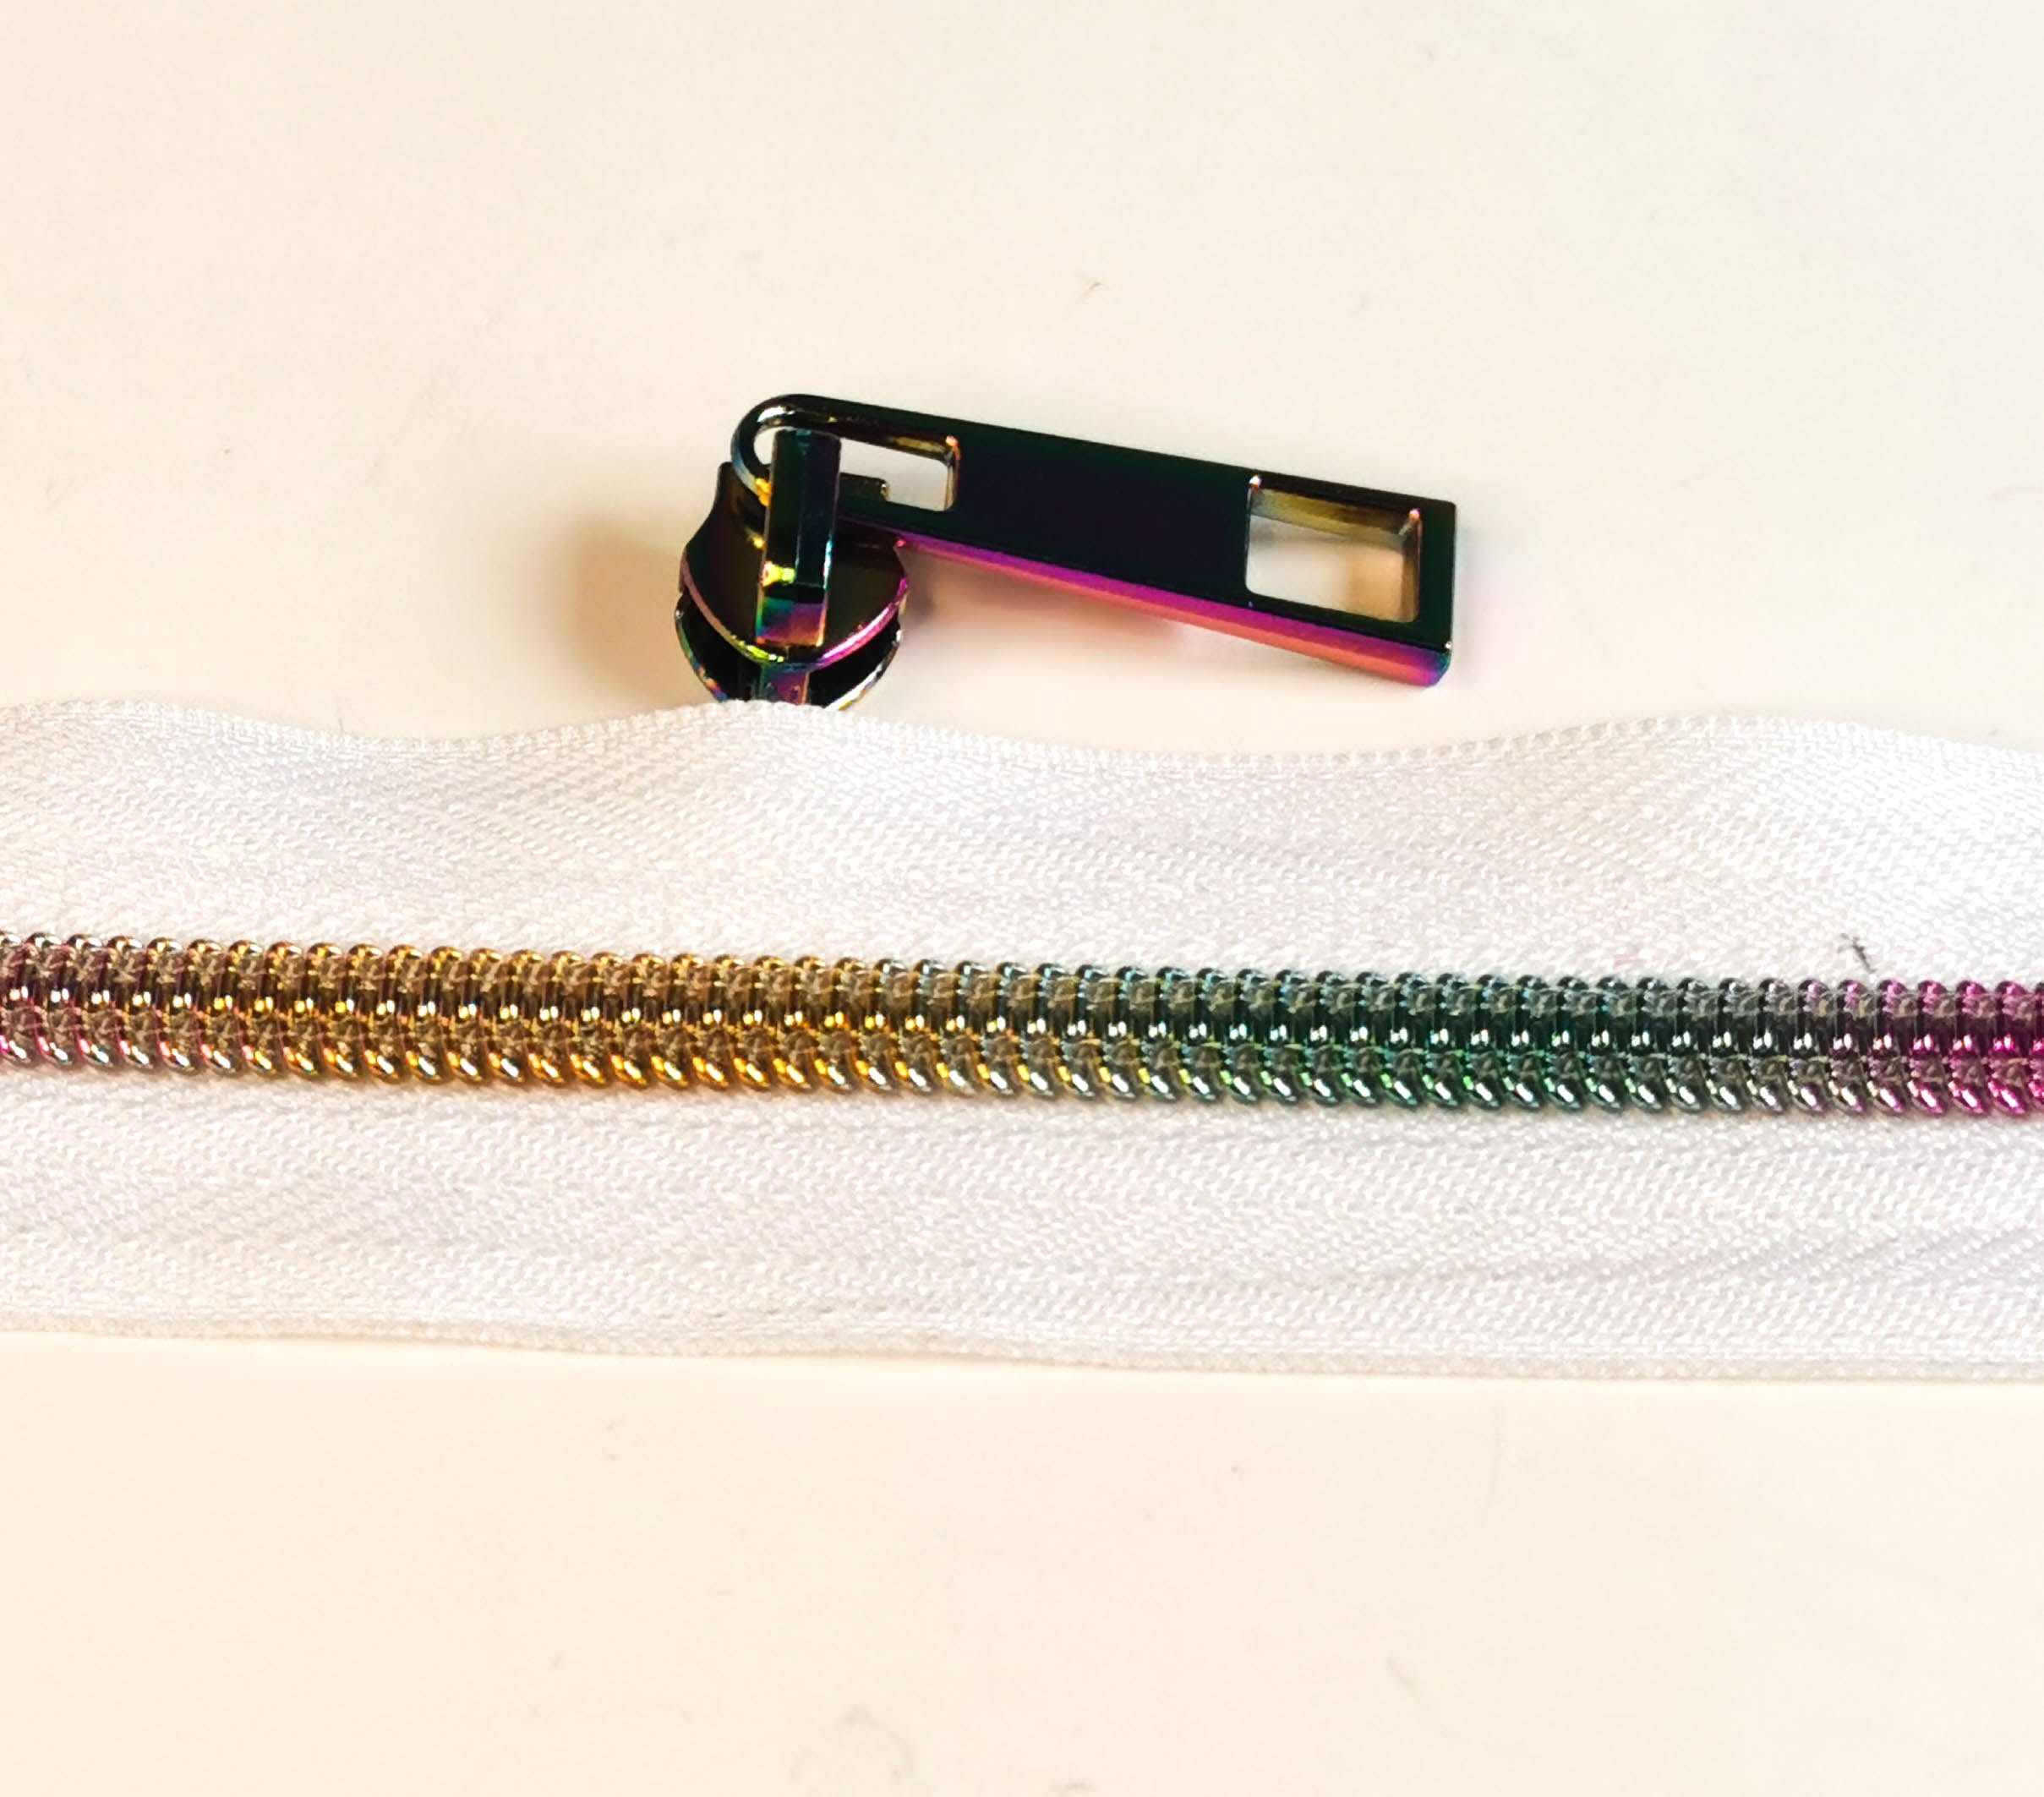 Kiwi Bagineers Zippers White / Rainbow Zipper Tape. 30" 76cm of #5 Zipper tape with 2 Zipper Sliders/Pullers By Kiwi Bagineers